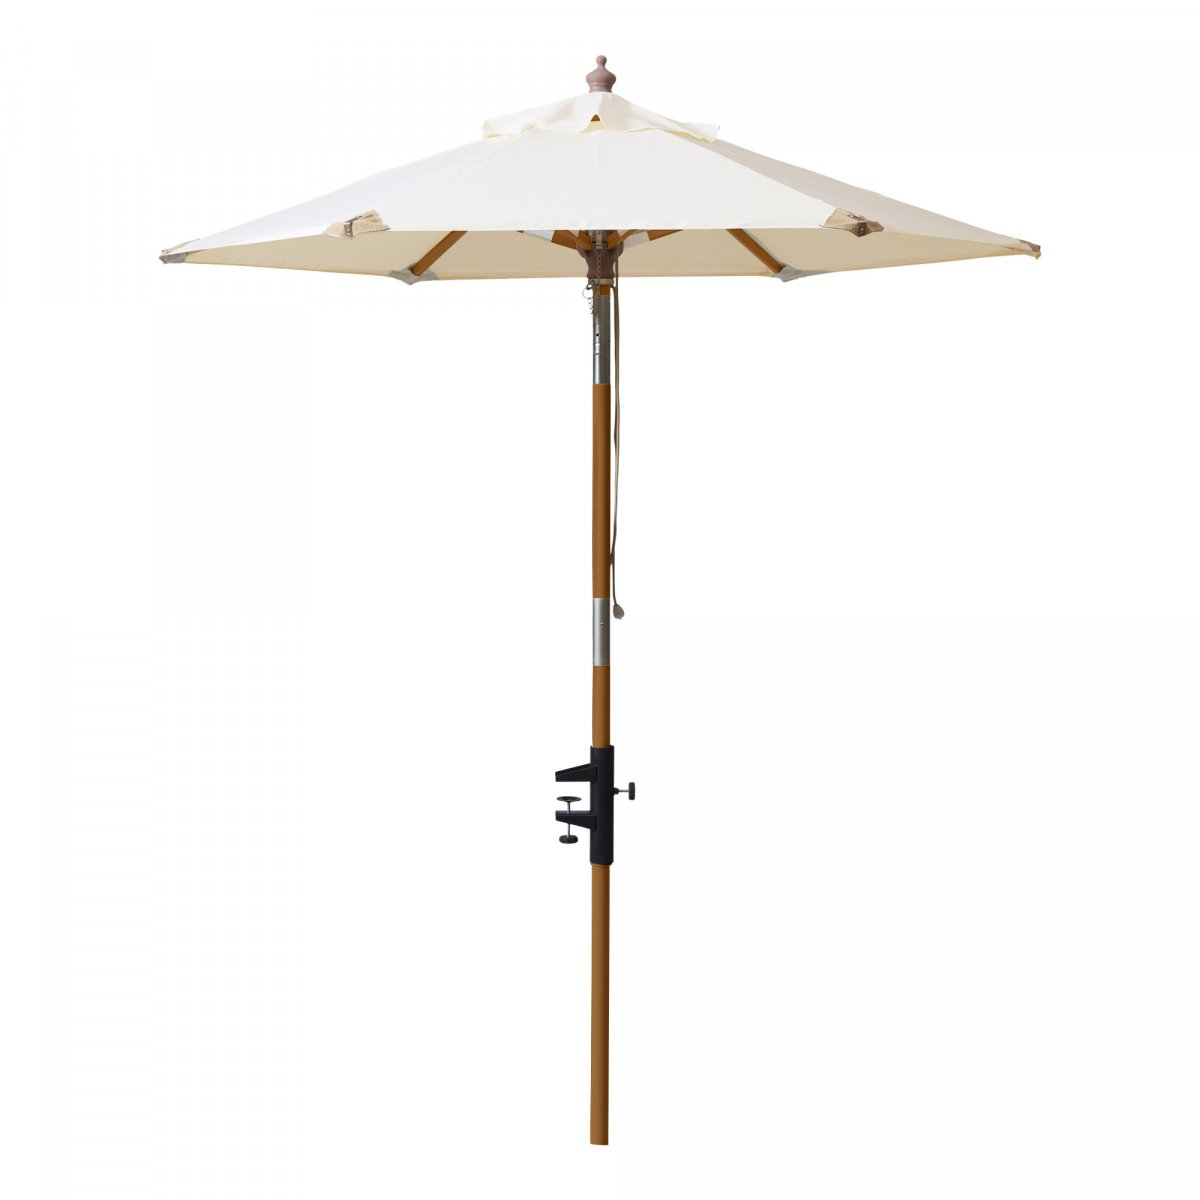 Luksus altan parasol - teak stok. parasollen